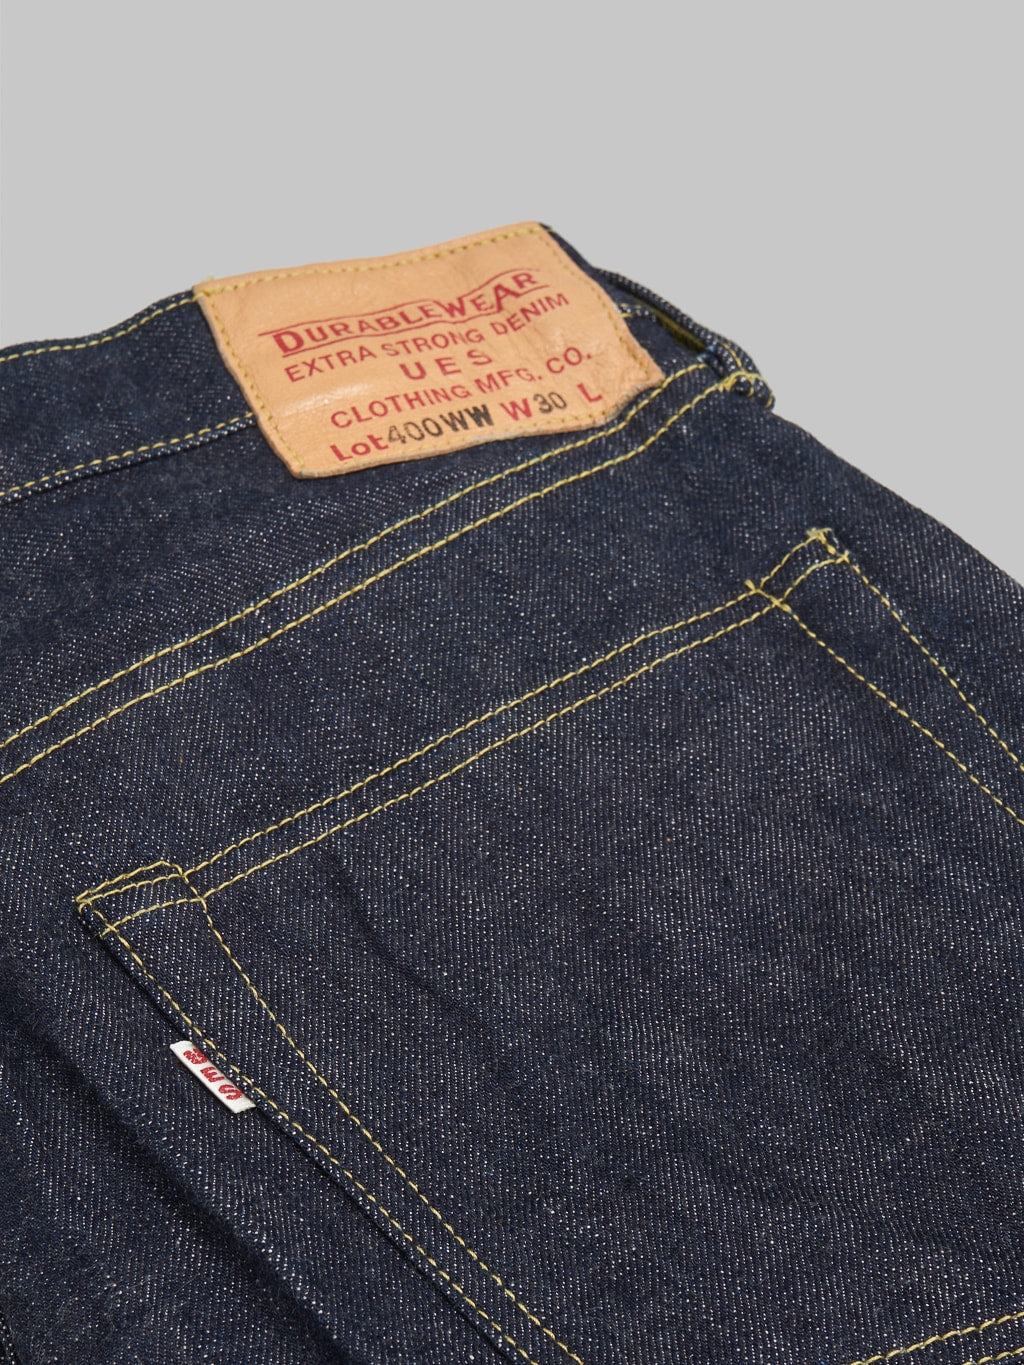 UES 400 WW Post World War Regular Straight Jeans pocket closeup